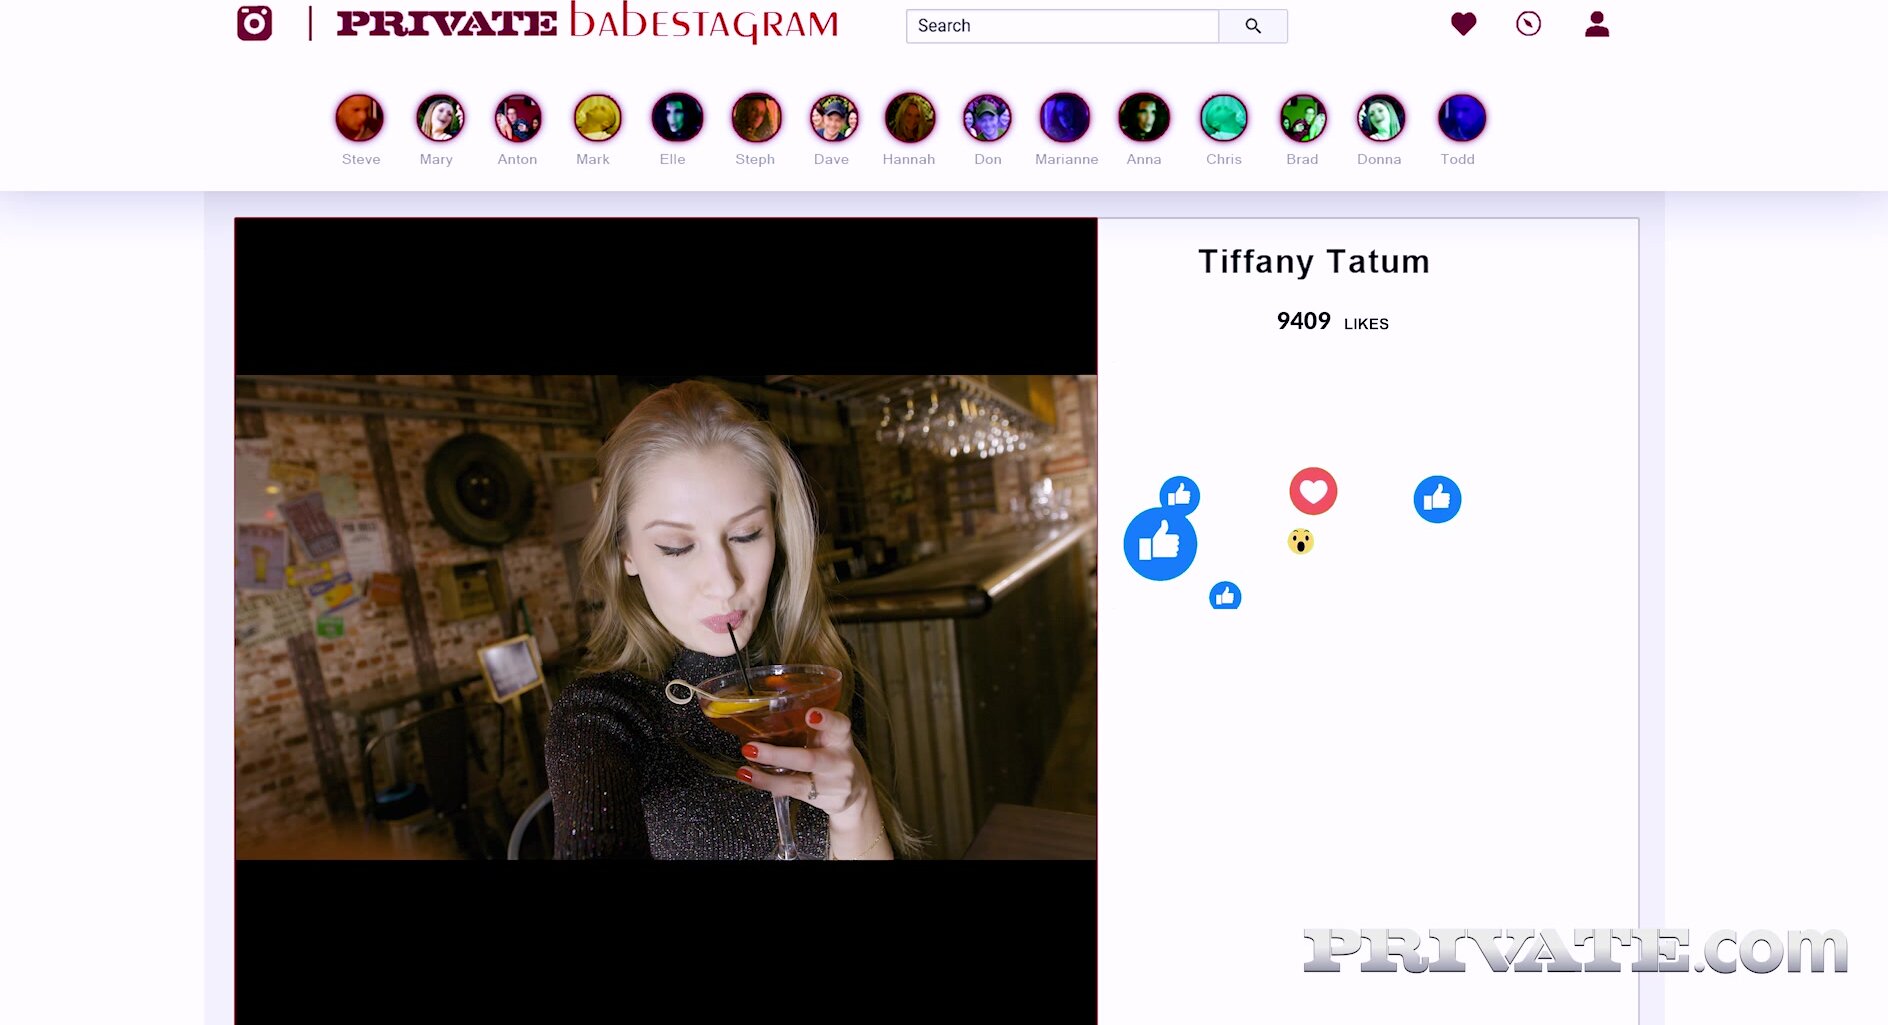 Cock Tales of Tiffany Tatum, an Influencer